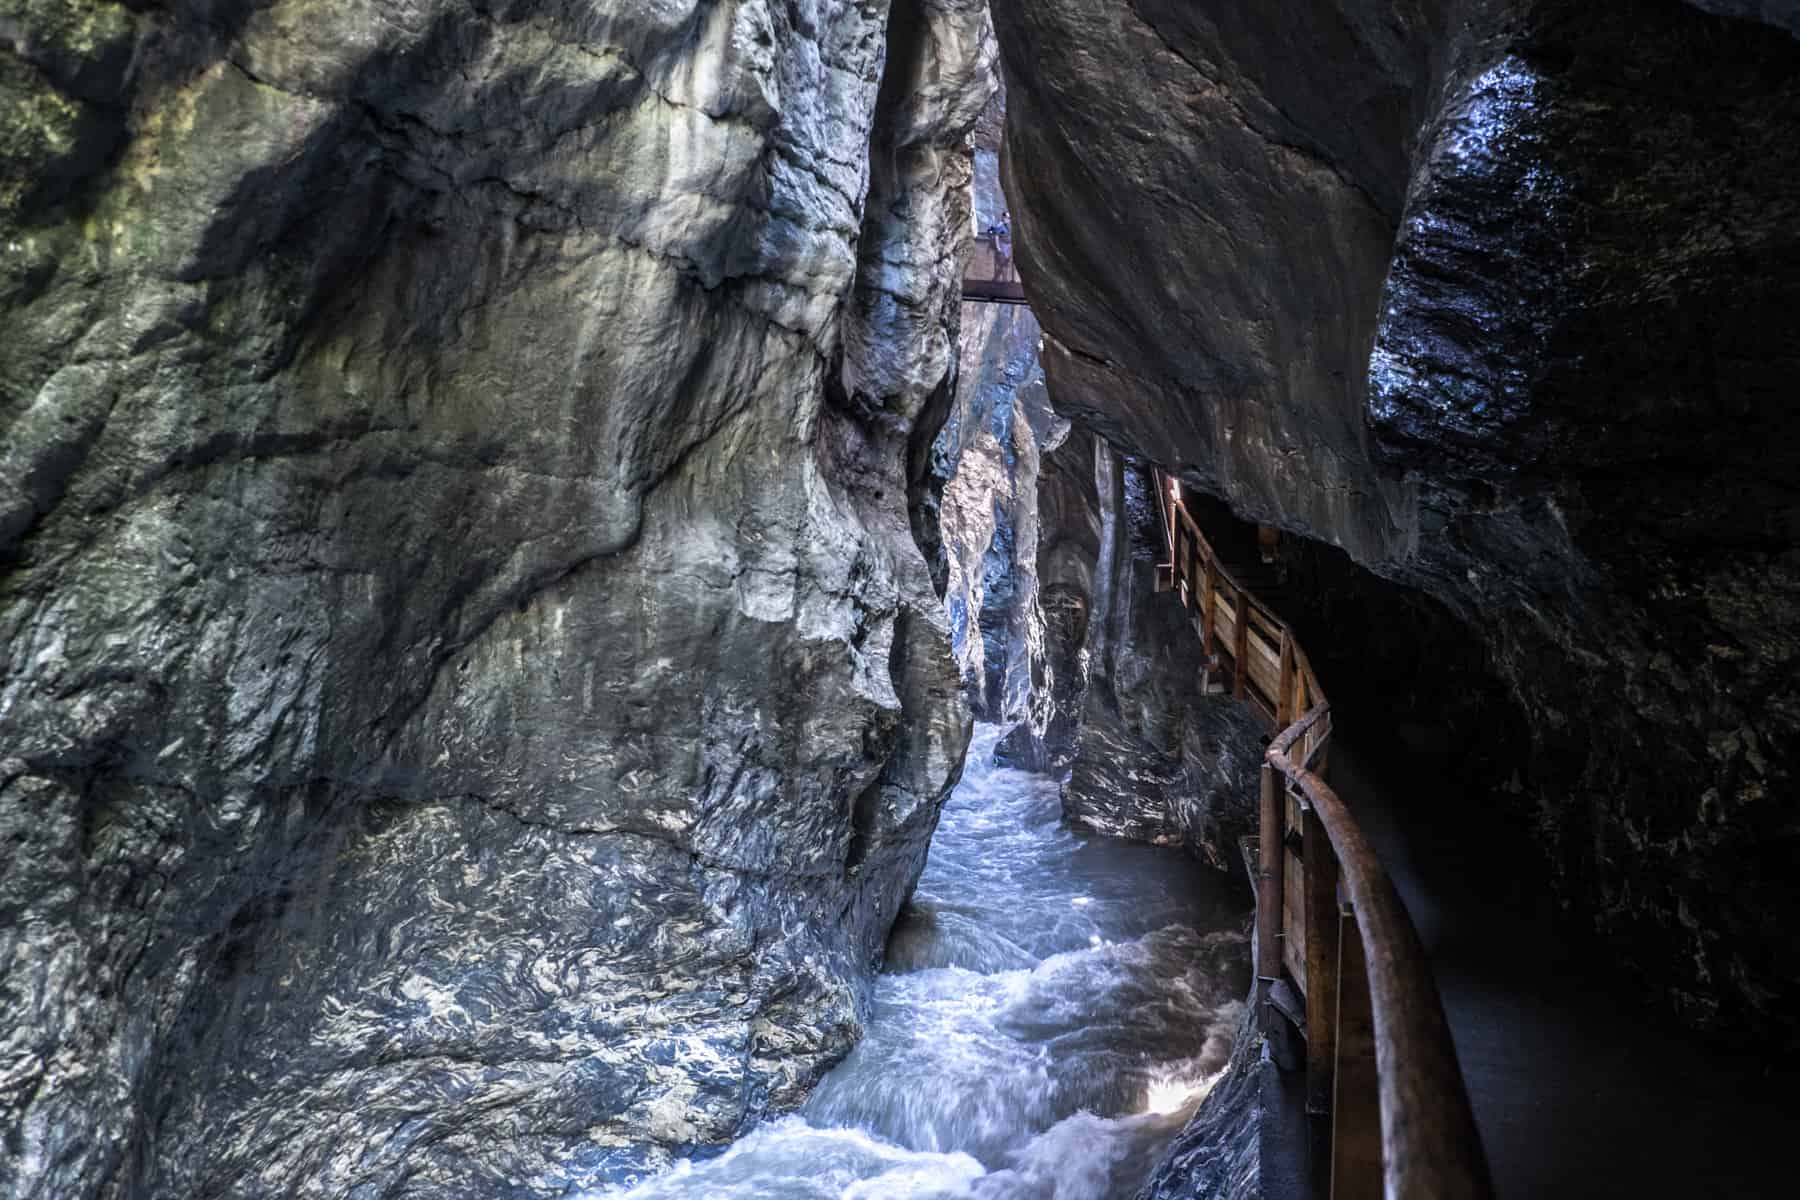 White water gushes through the narrow silvery green rock walls of Liechtensteinklamm in Austria